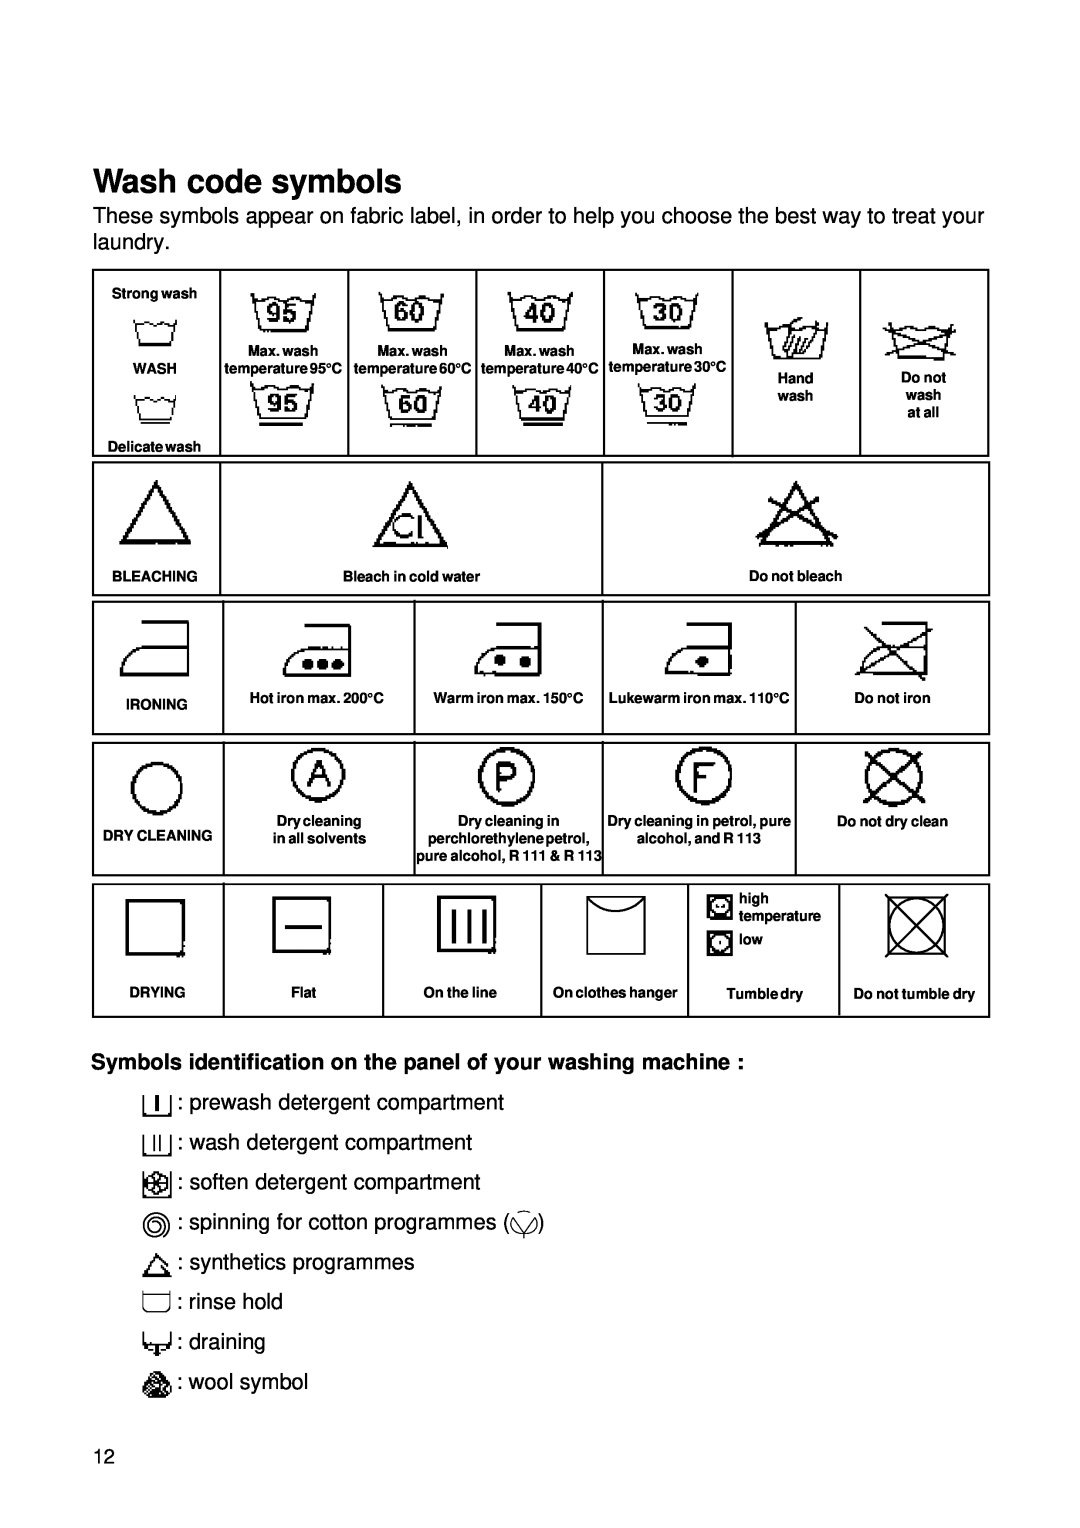 Zanussi TL 553 C manual Wash code symbols, Symbols identification on the panel of your washing machine 